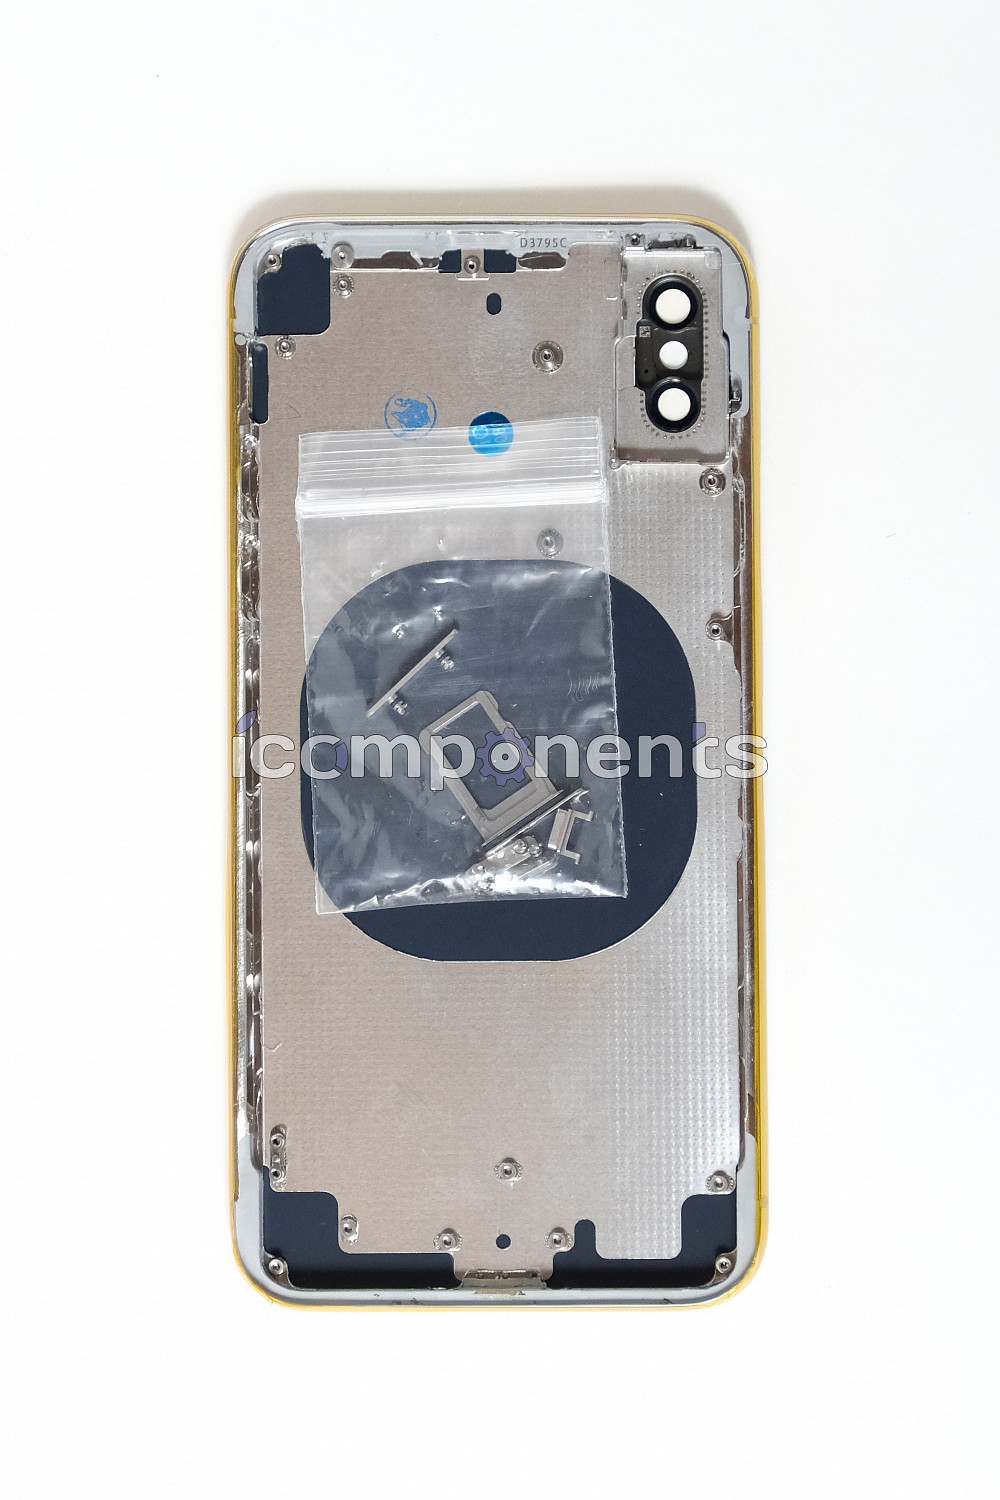 картинка iPhone X - Корпус ORIG 1:1, белый от магазина Компания+